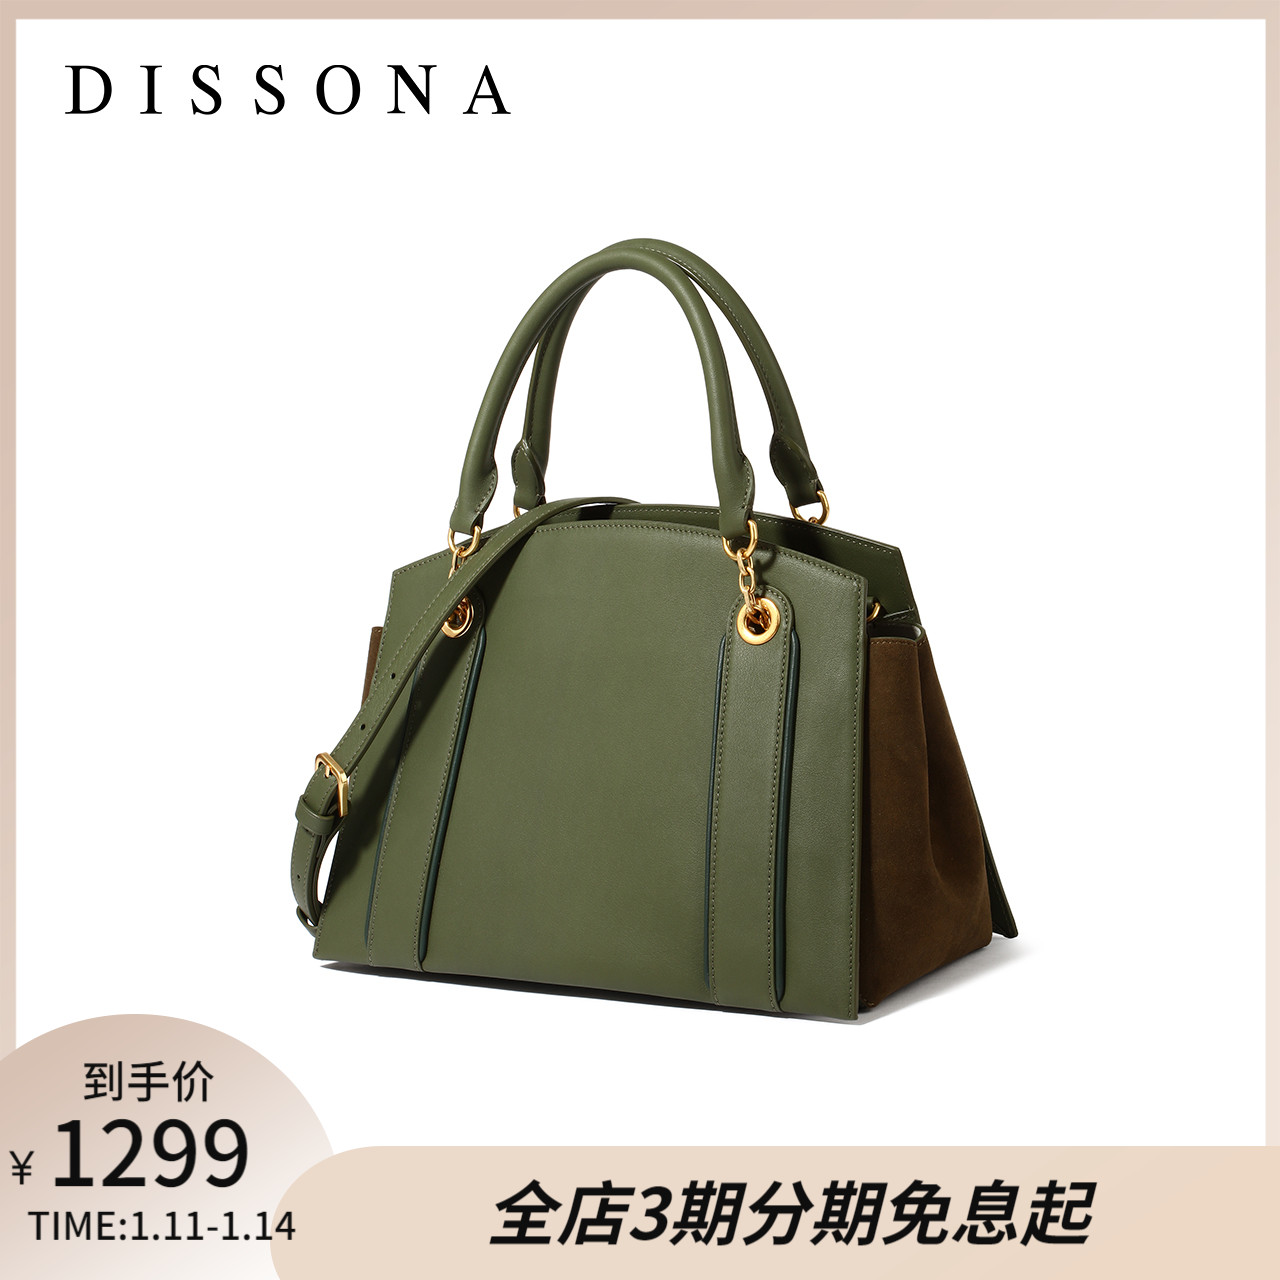 dissona chain sling bag dissona bag price